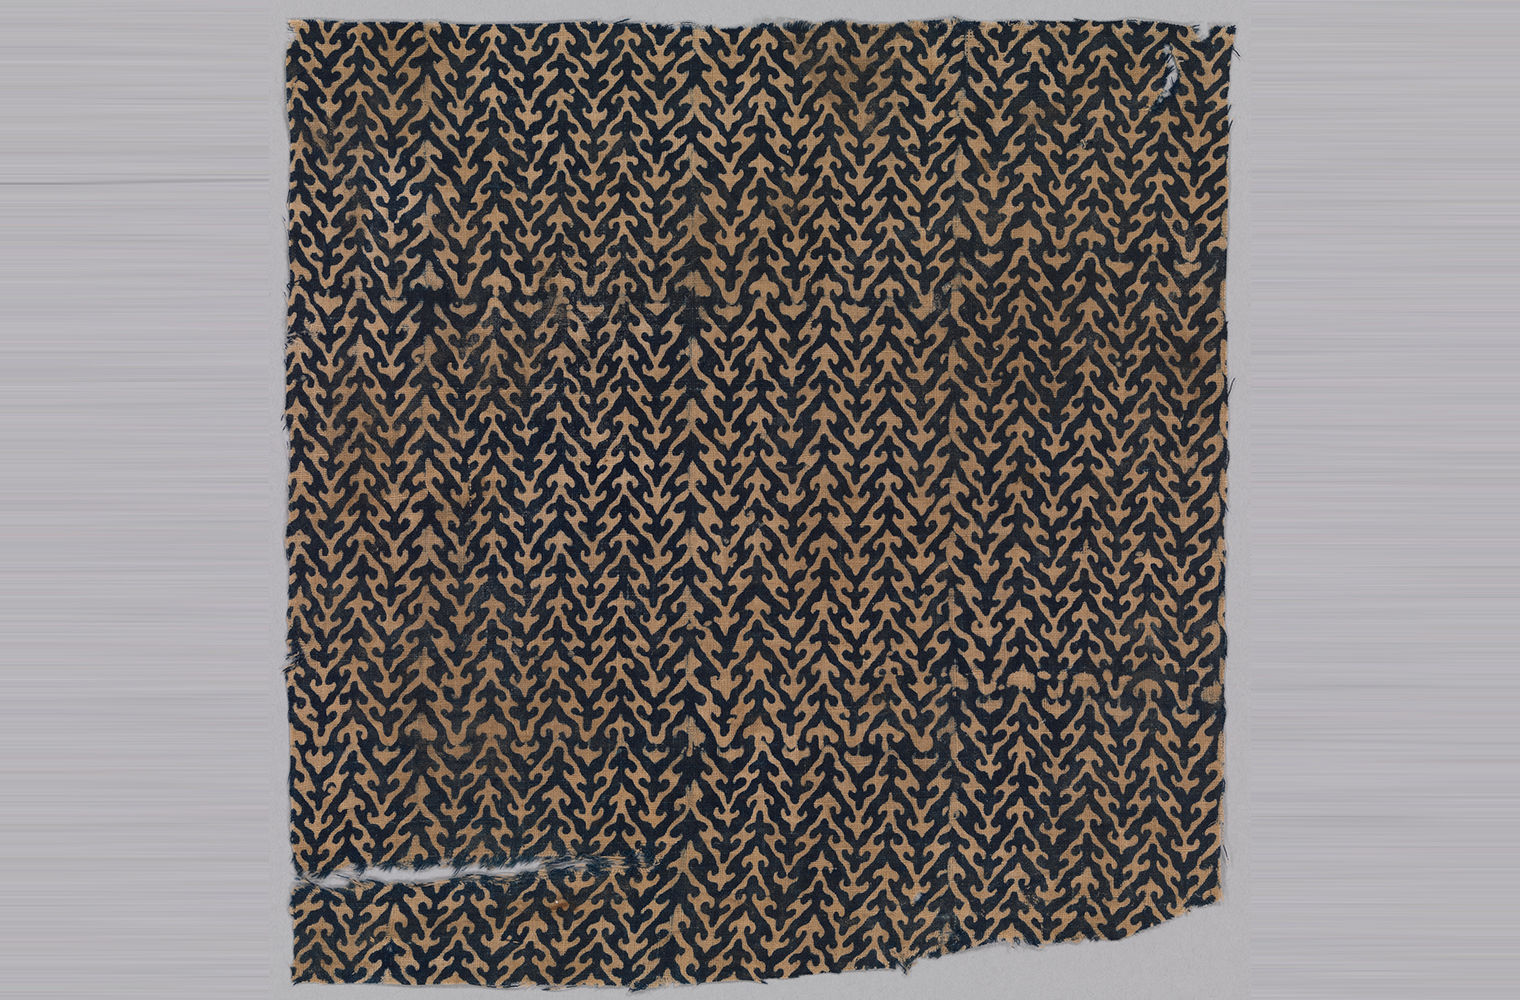 A plain-woven, block-printed, cotton textile fragment.